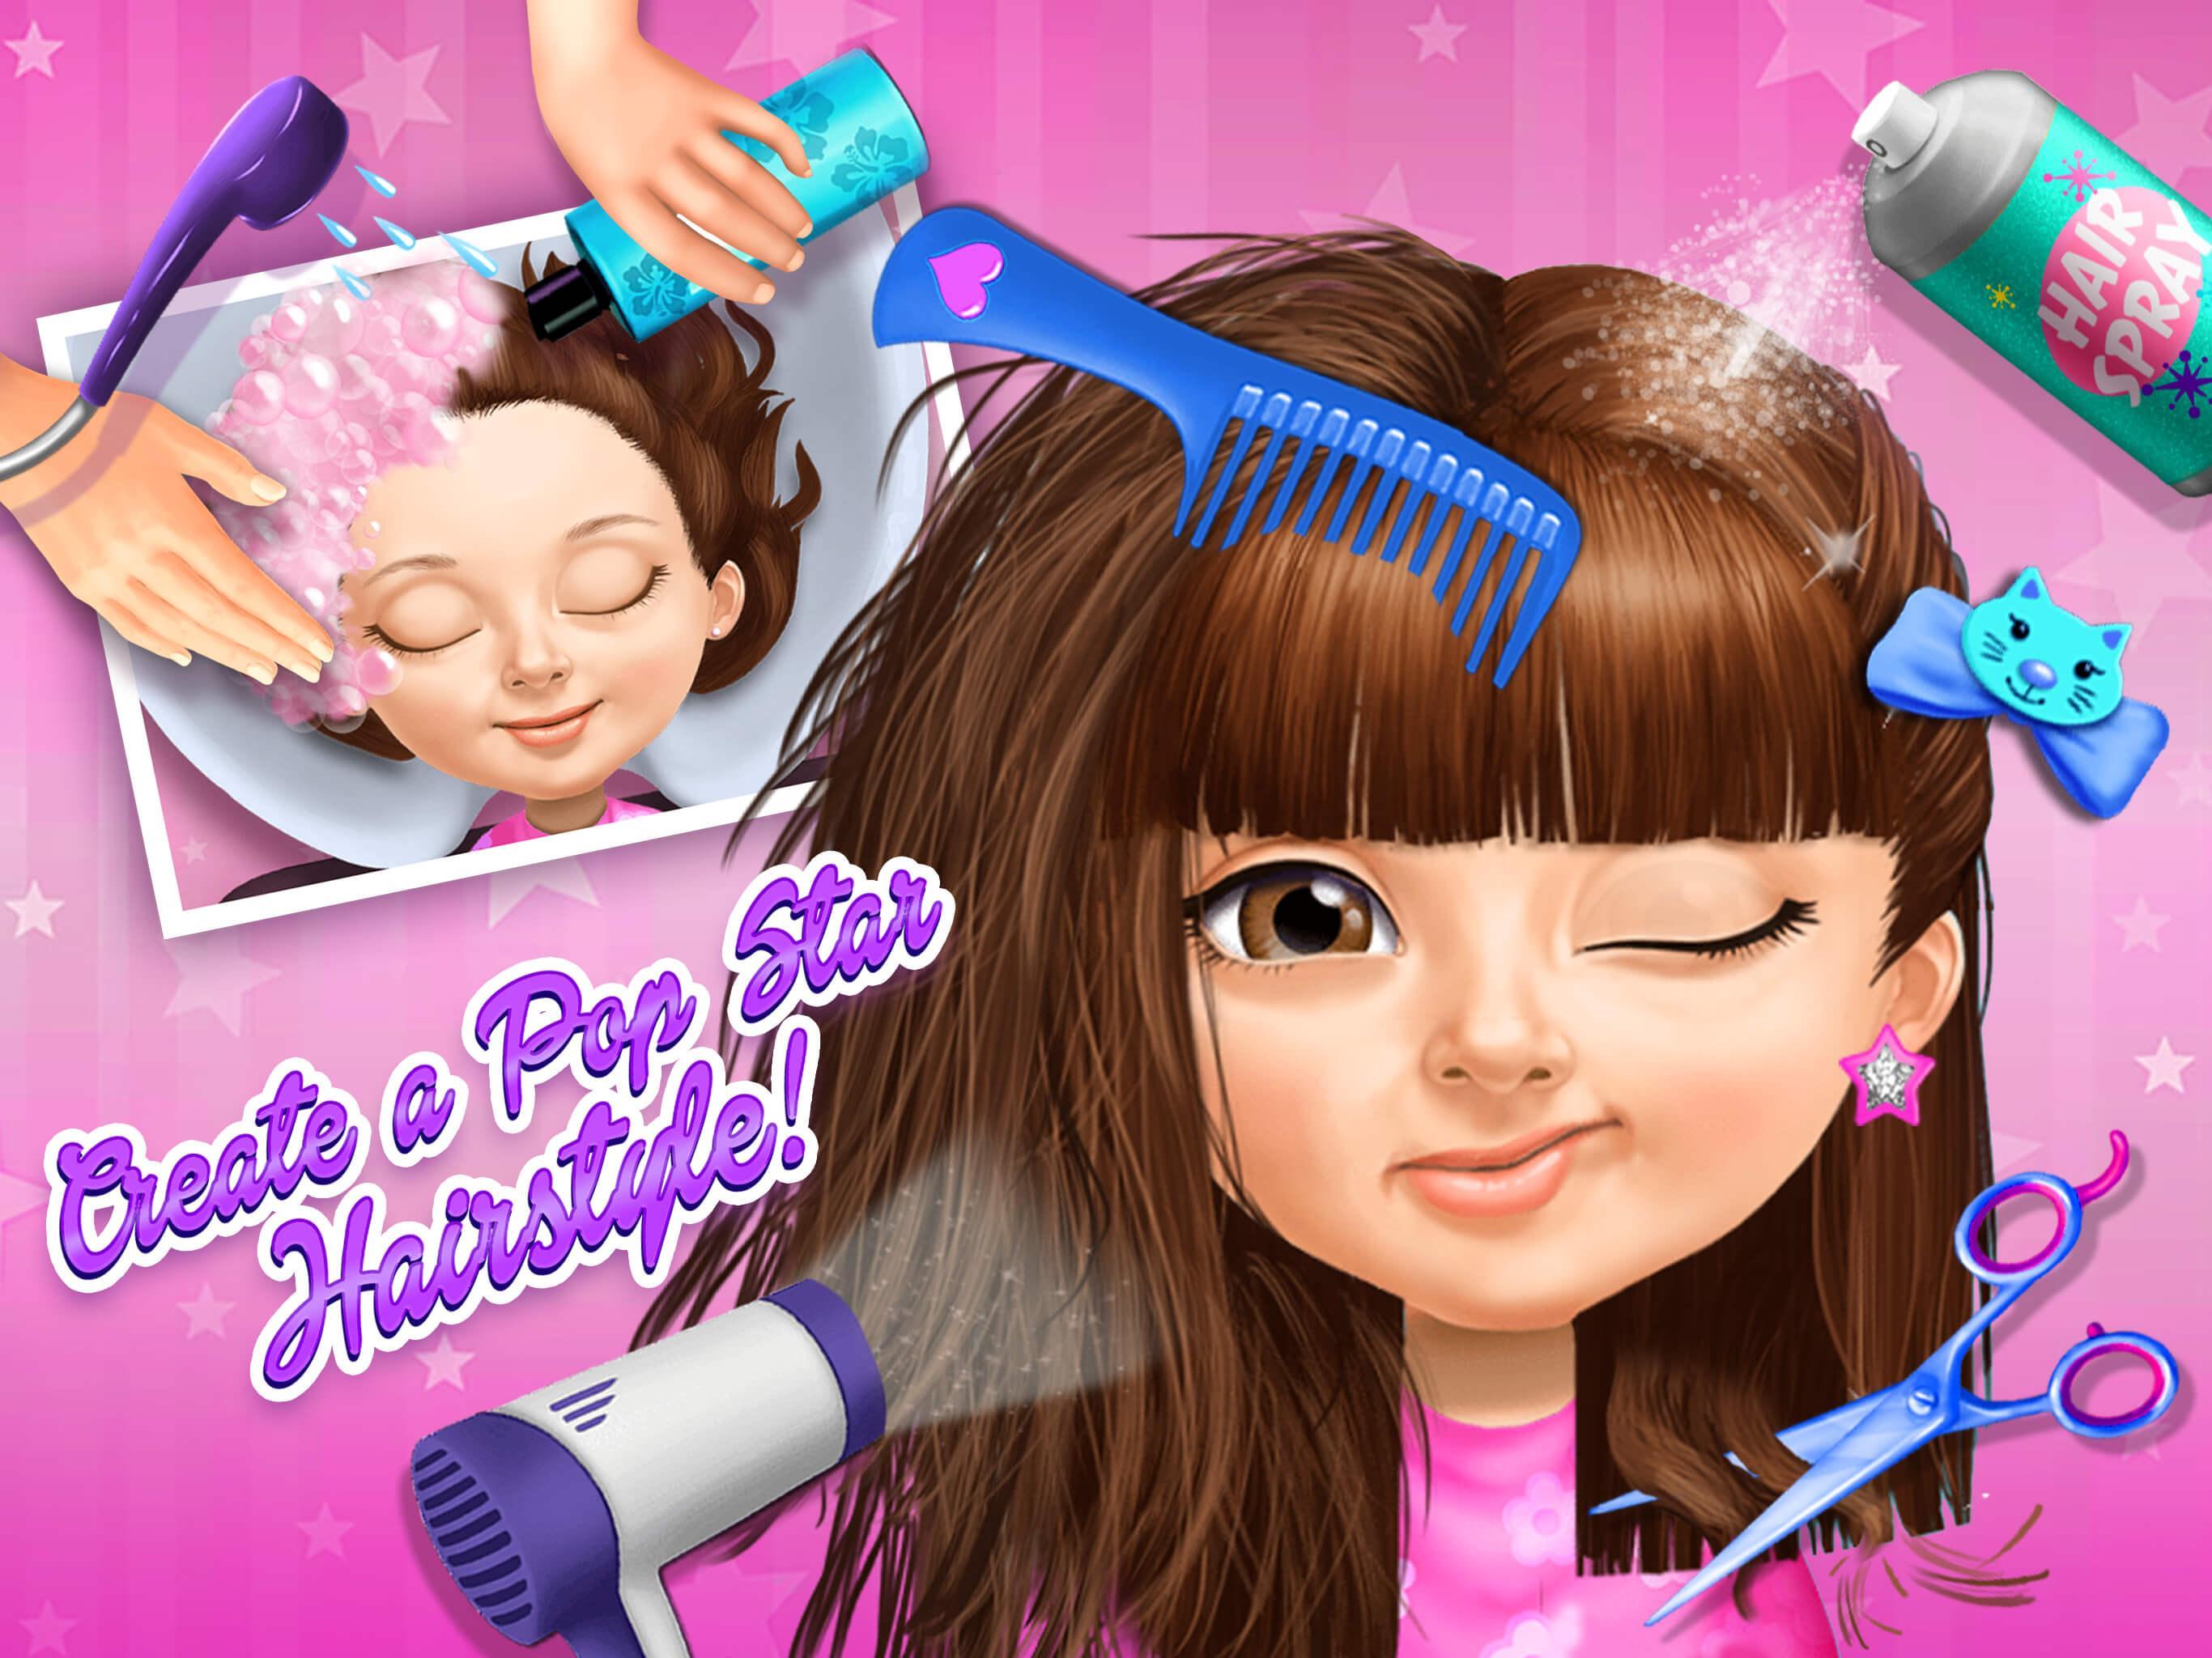 Sweet Baby Girl Pop Stars - Superstar Salon & Show 3.0.10001 Screenshot 17